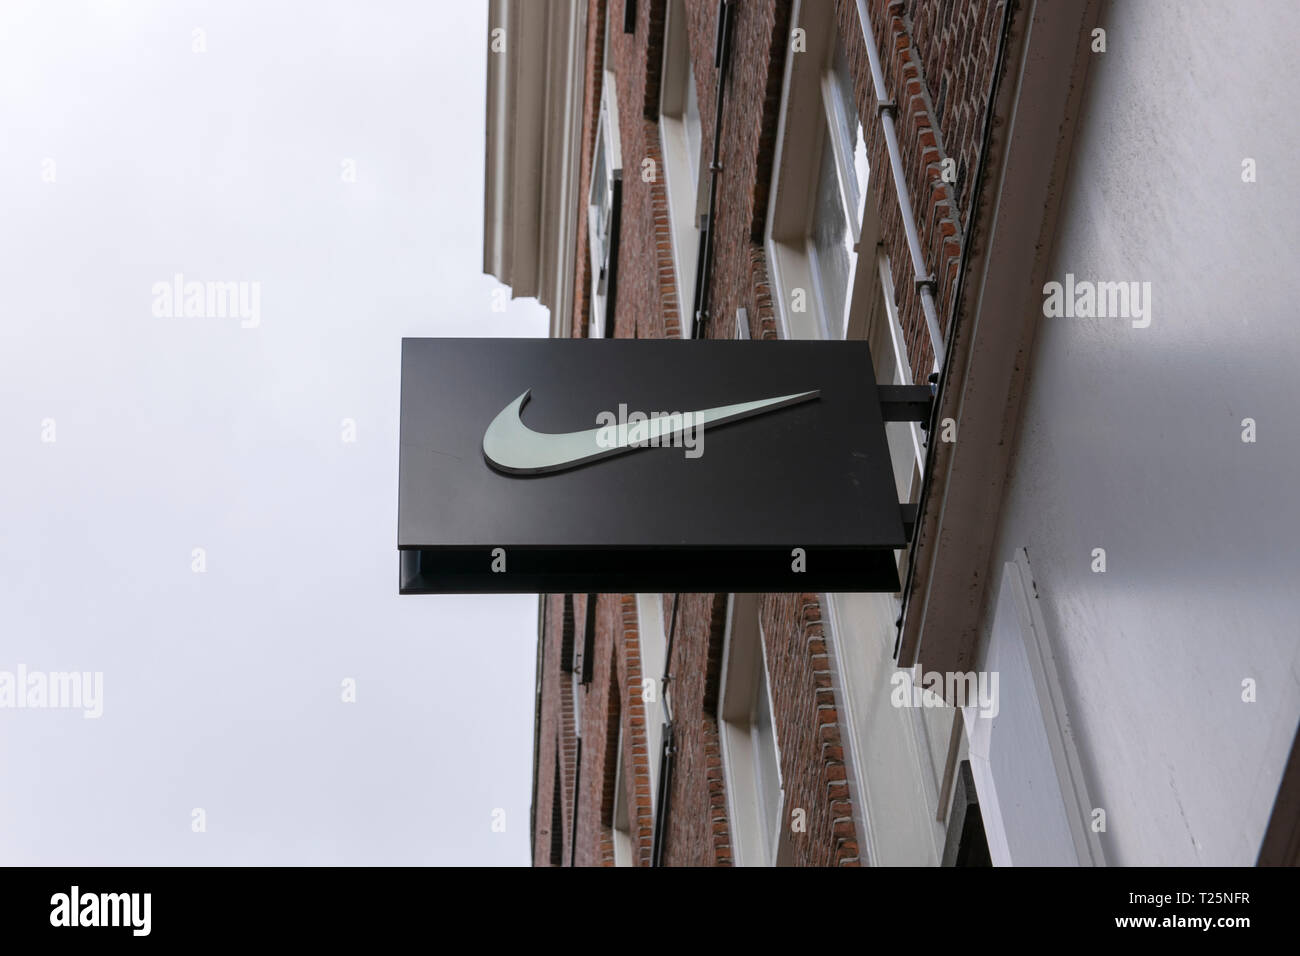 Ophef probleem vriendelijke groet Logo Of The Nike Store At The Kalverstraat Amsterdam The Netherlands 2019  Stock Photo - Alamy